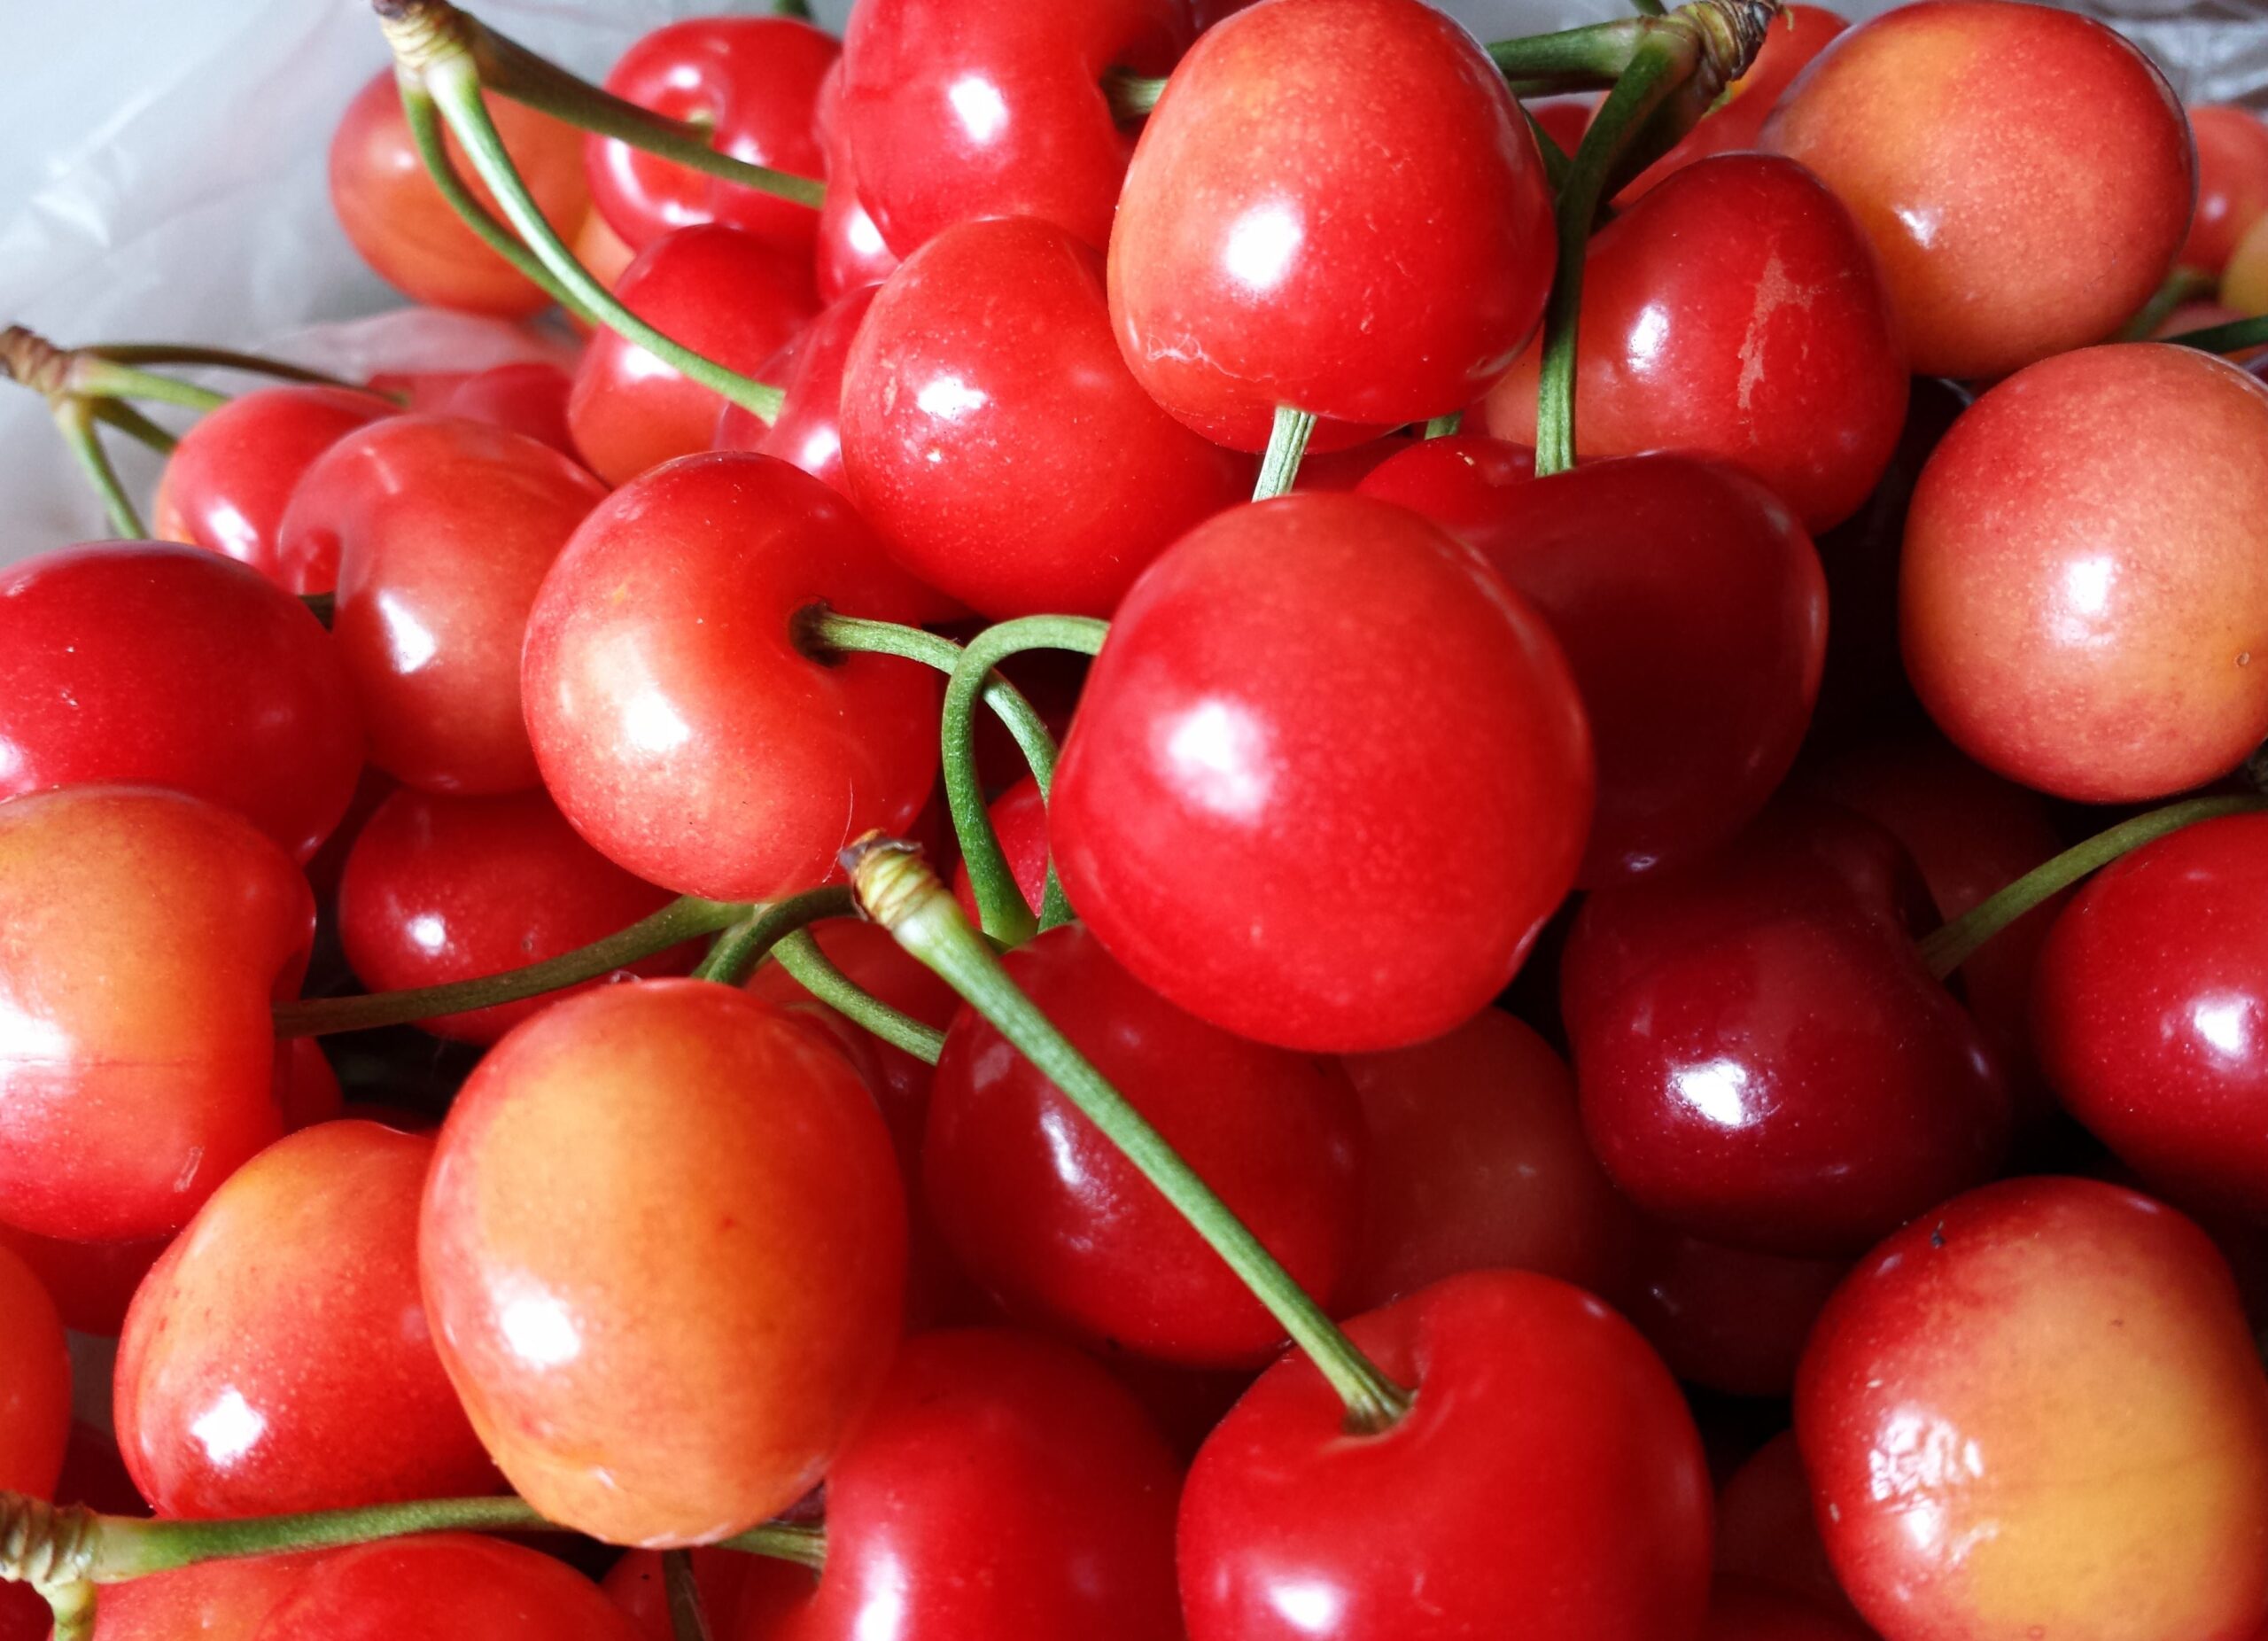 Super-sweet tree-ripened white-flesh Rainier cherries - one of the favourites when in season